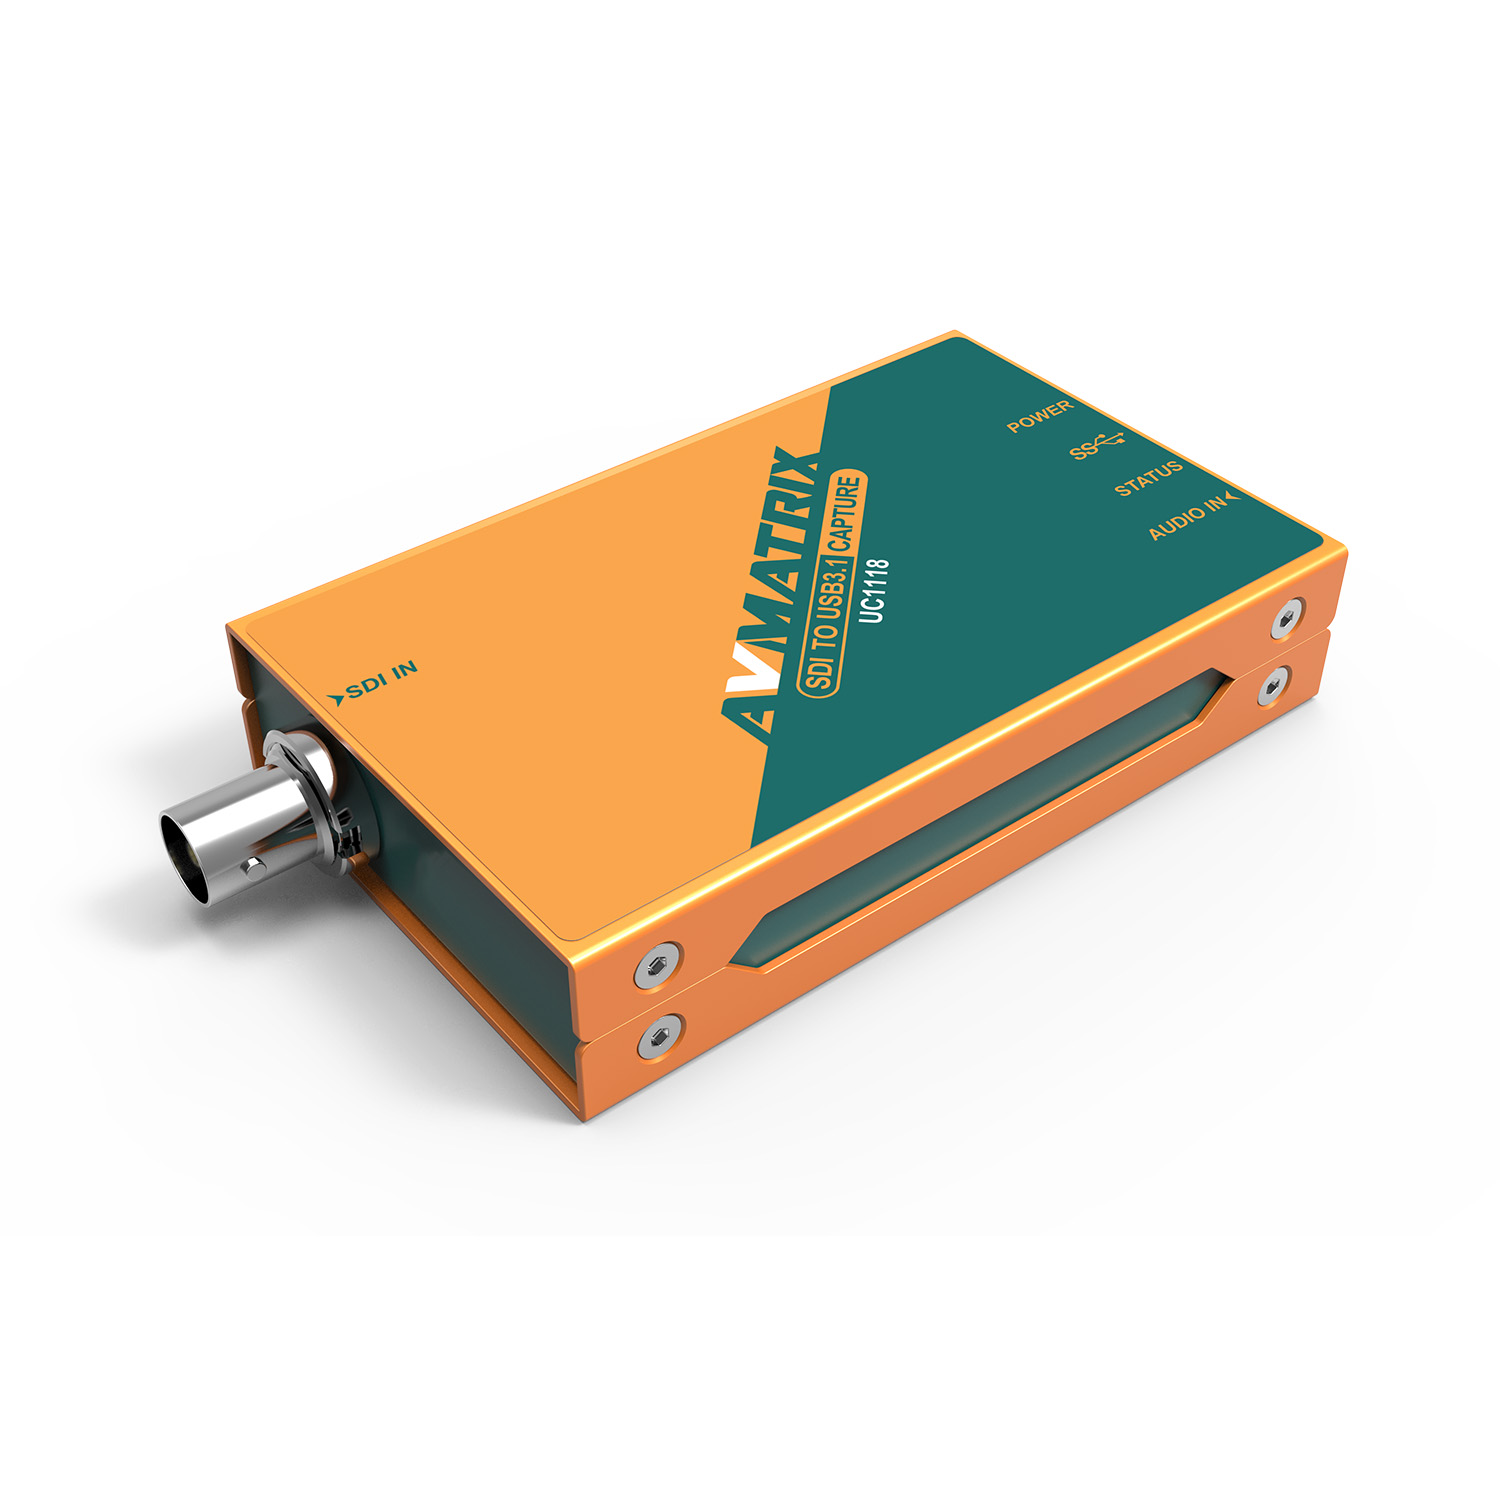 UC1118 – SDI to USB3.1 Gen1 Capture